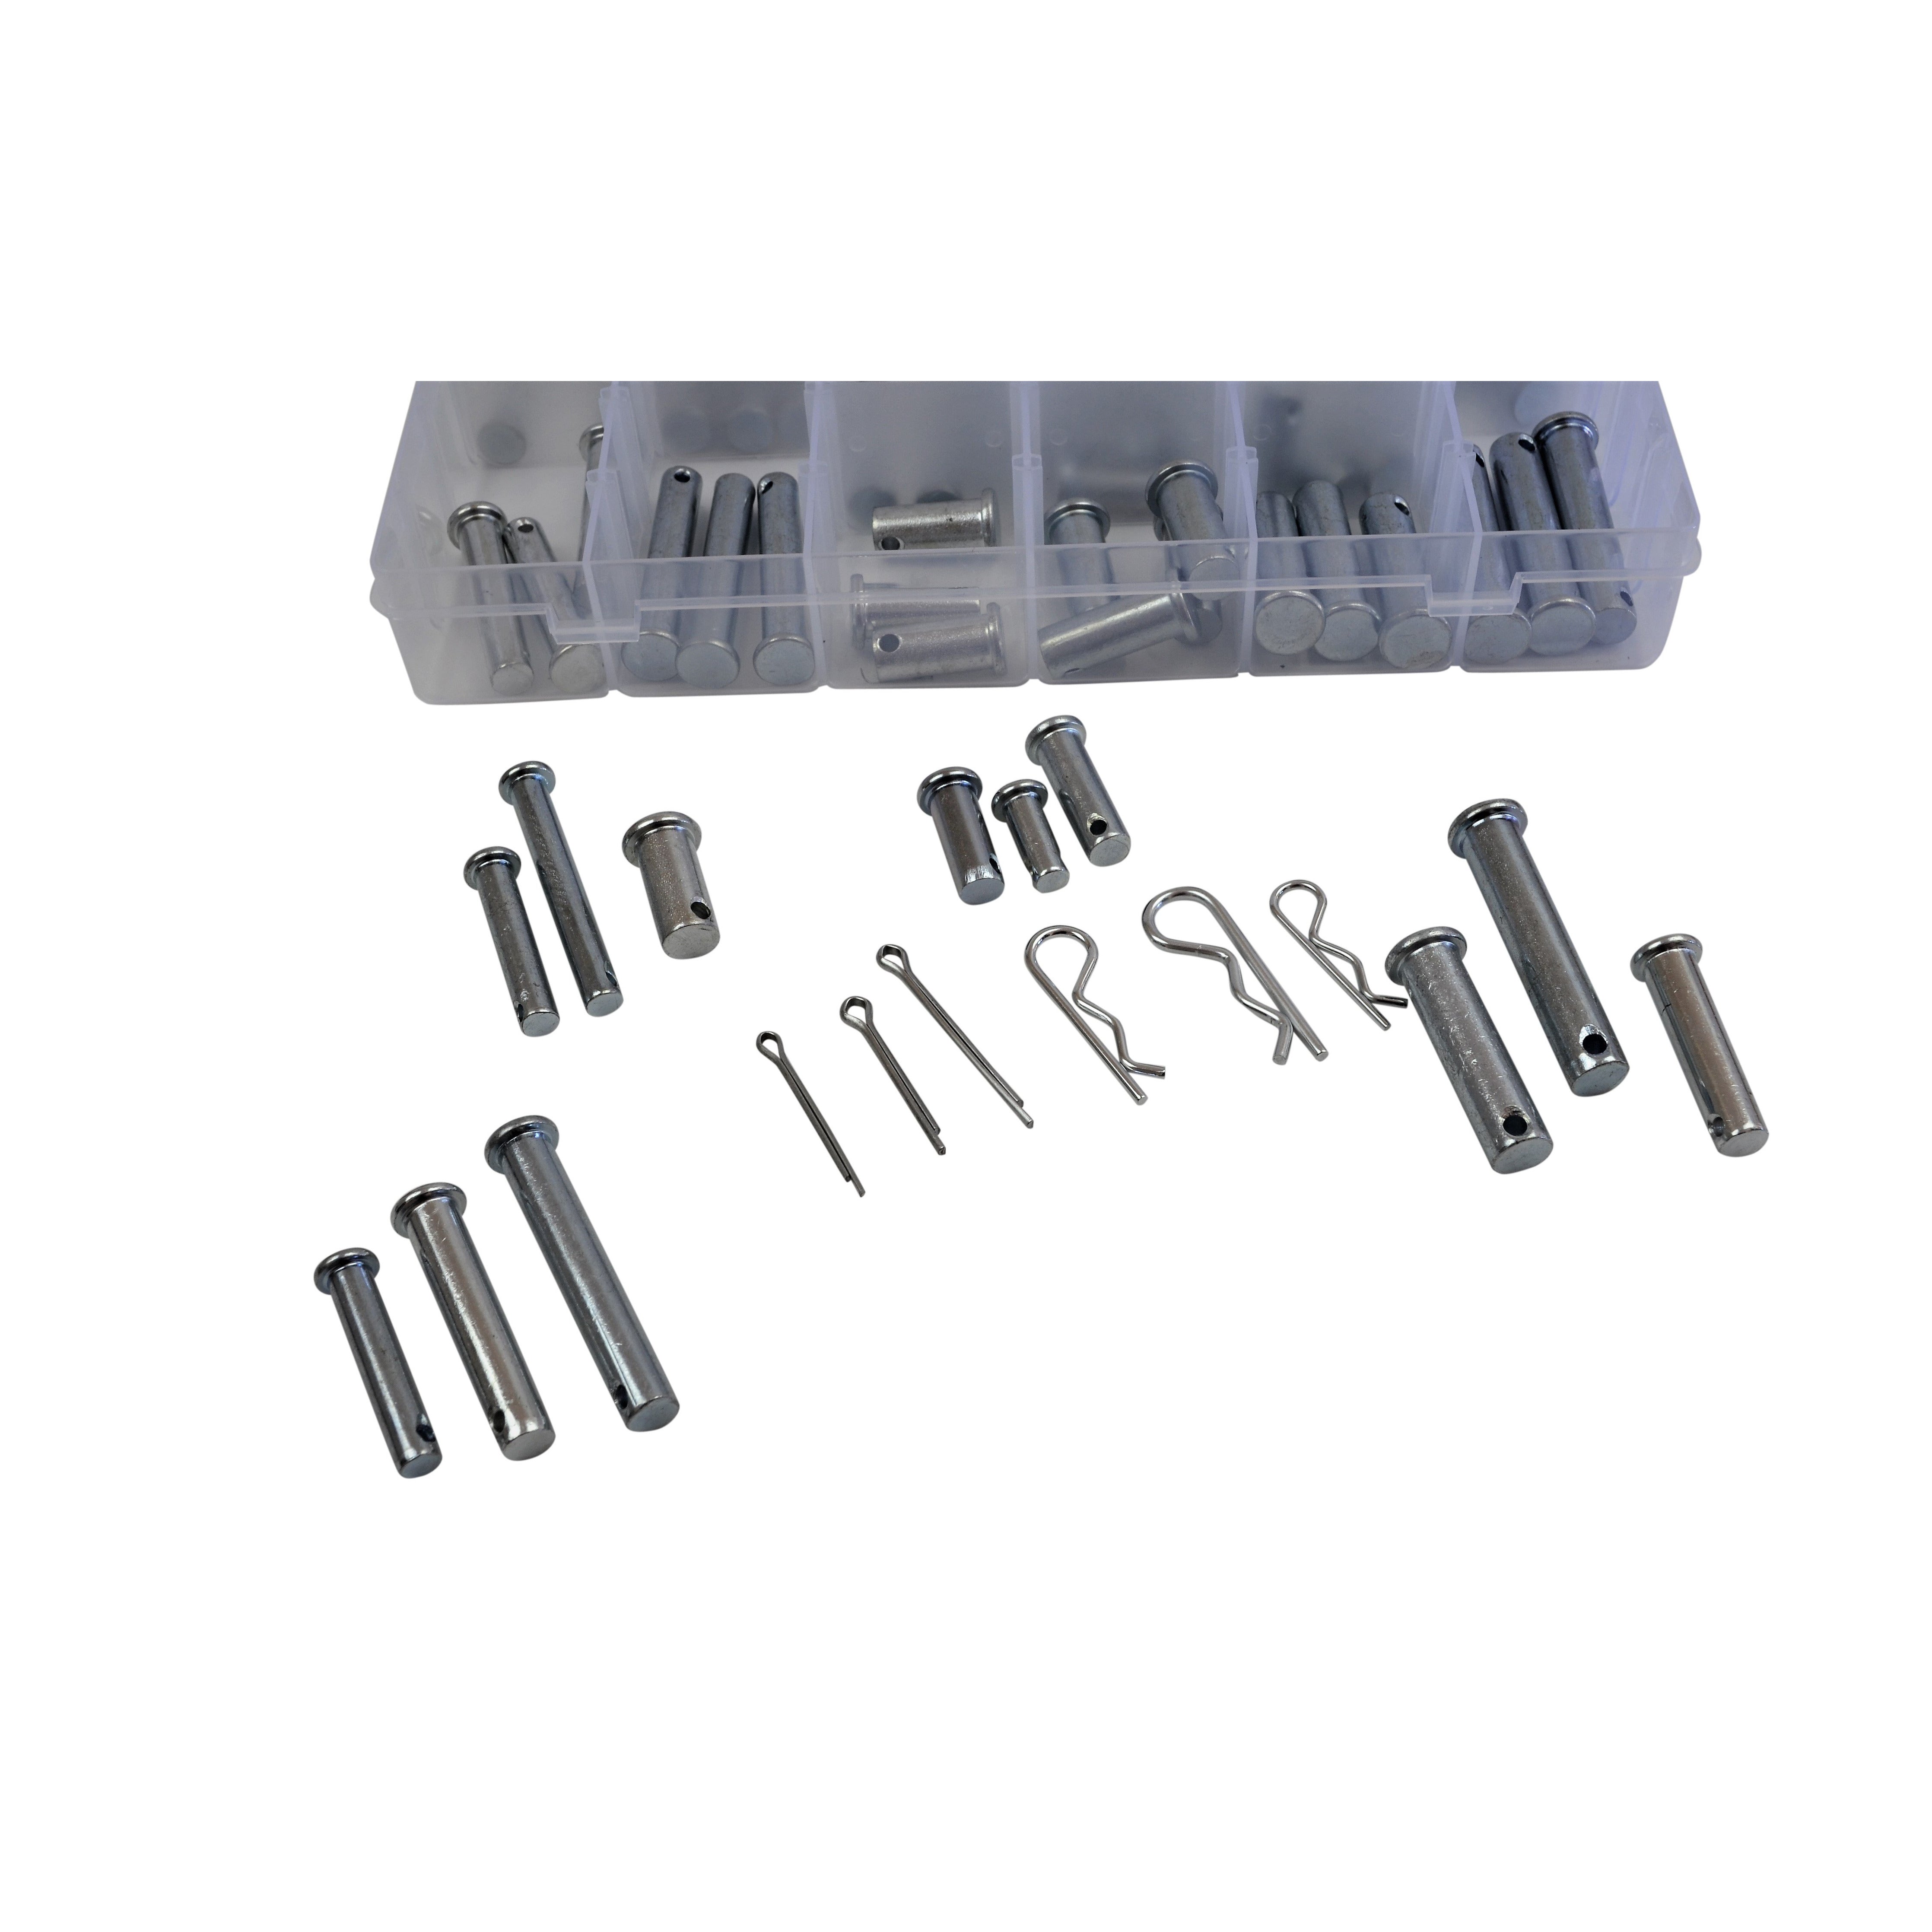 112 Pc Metric Clevis Pin & R Pin & Split Pin grab kit assortment